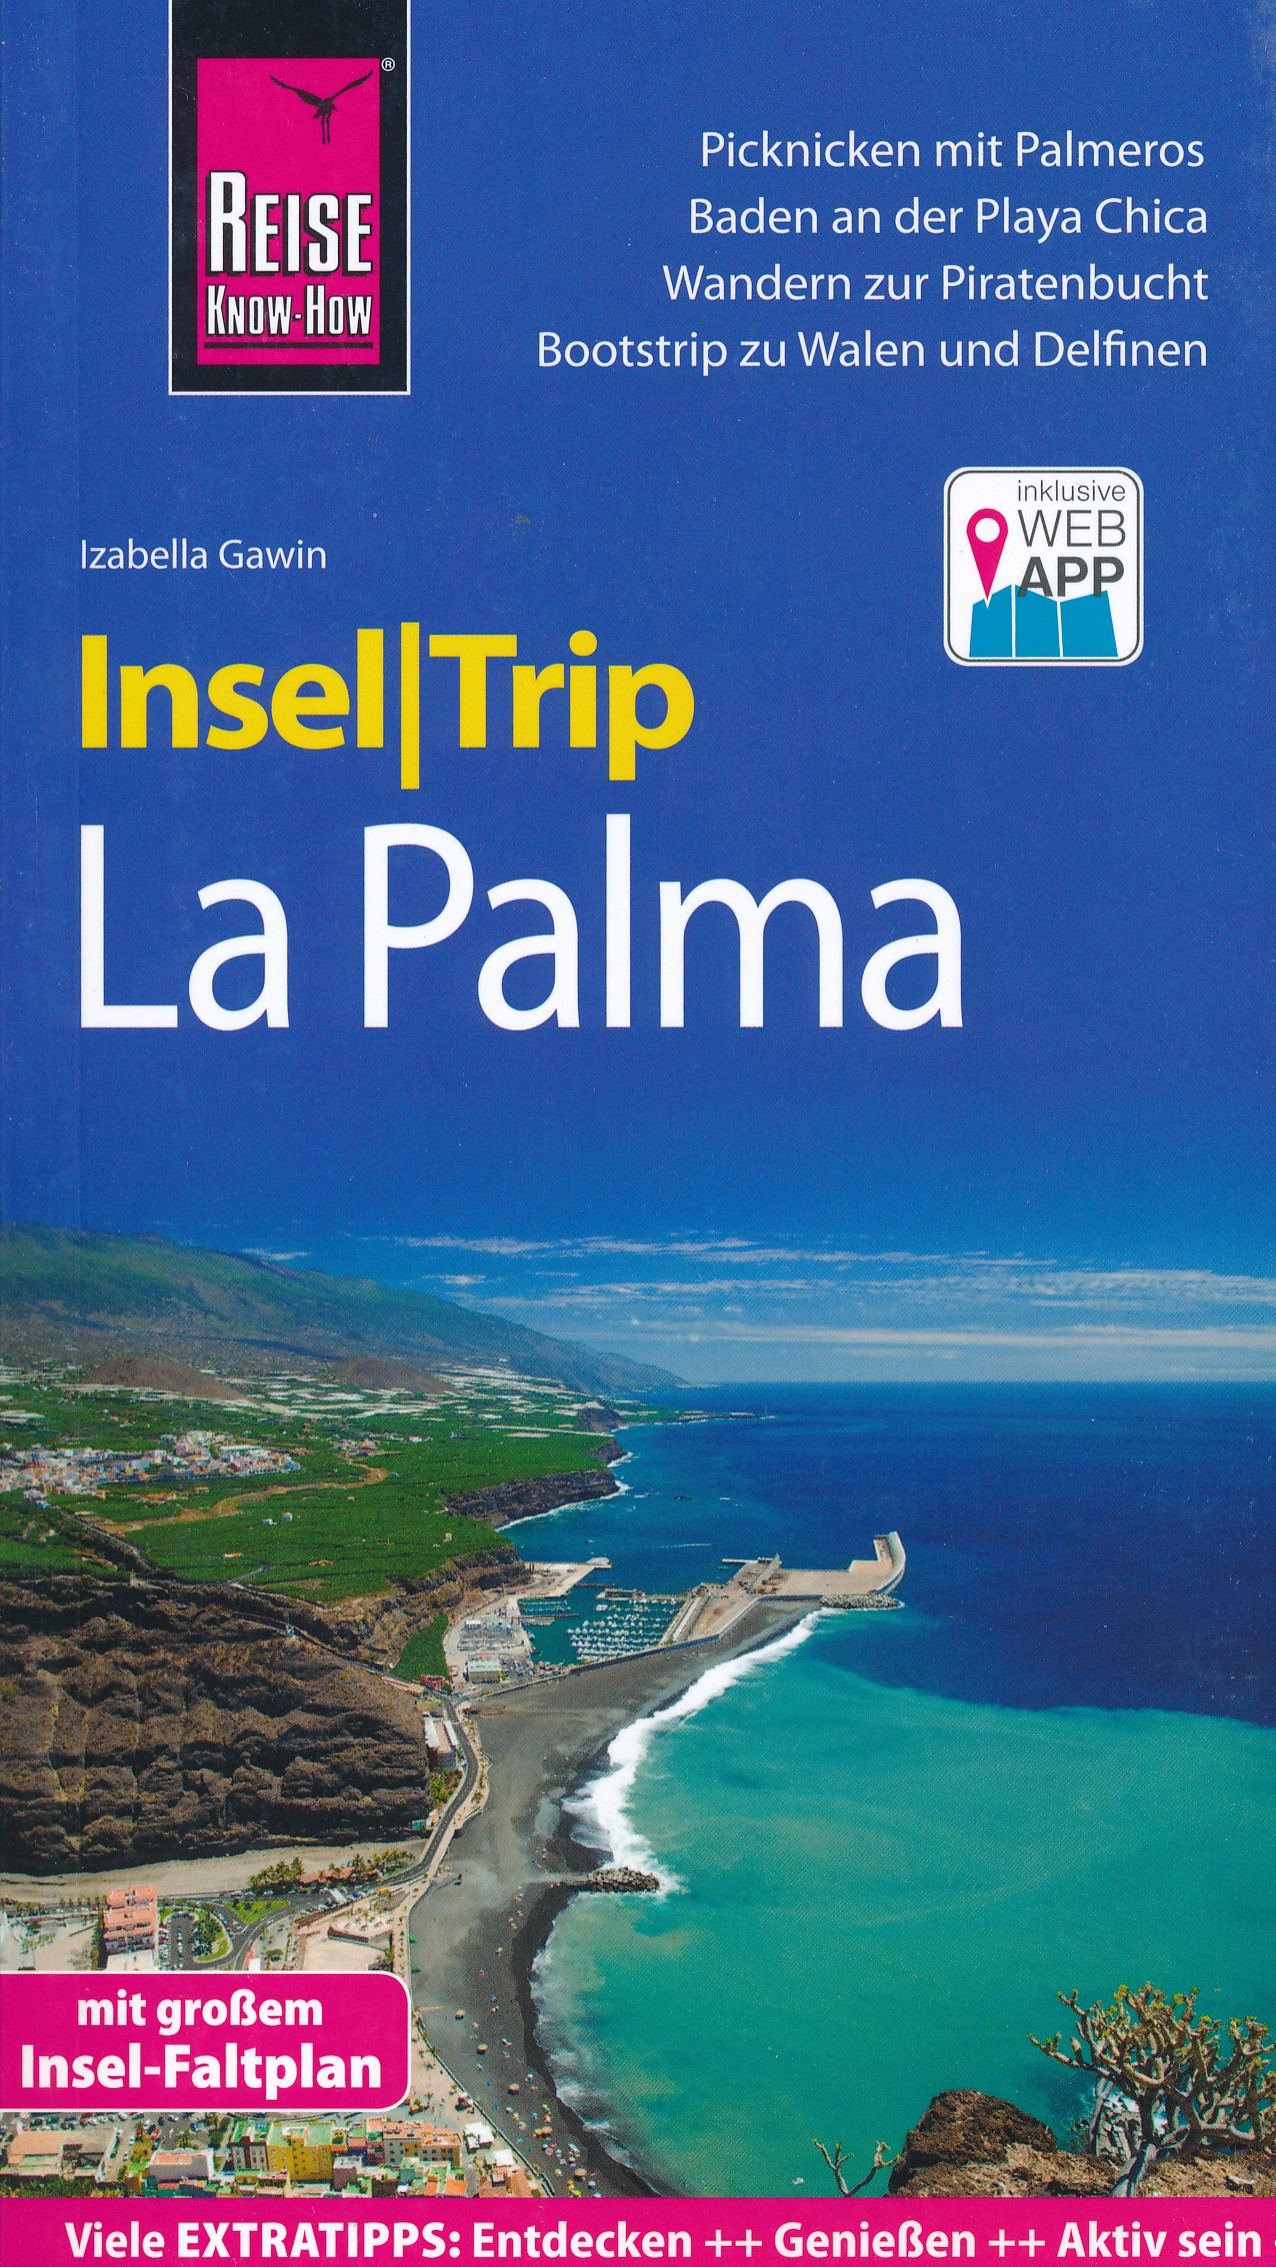 Online bestellen: Reisgids Insel|Trip La Palma | Reise Know-How Verlag